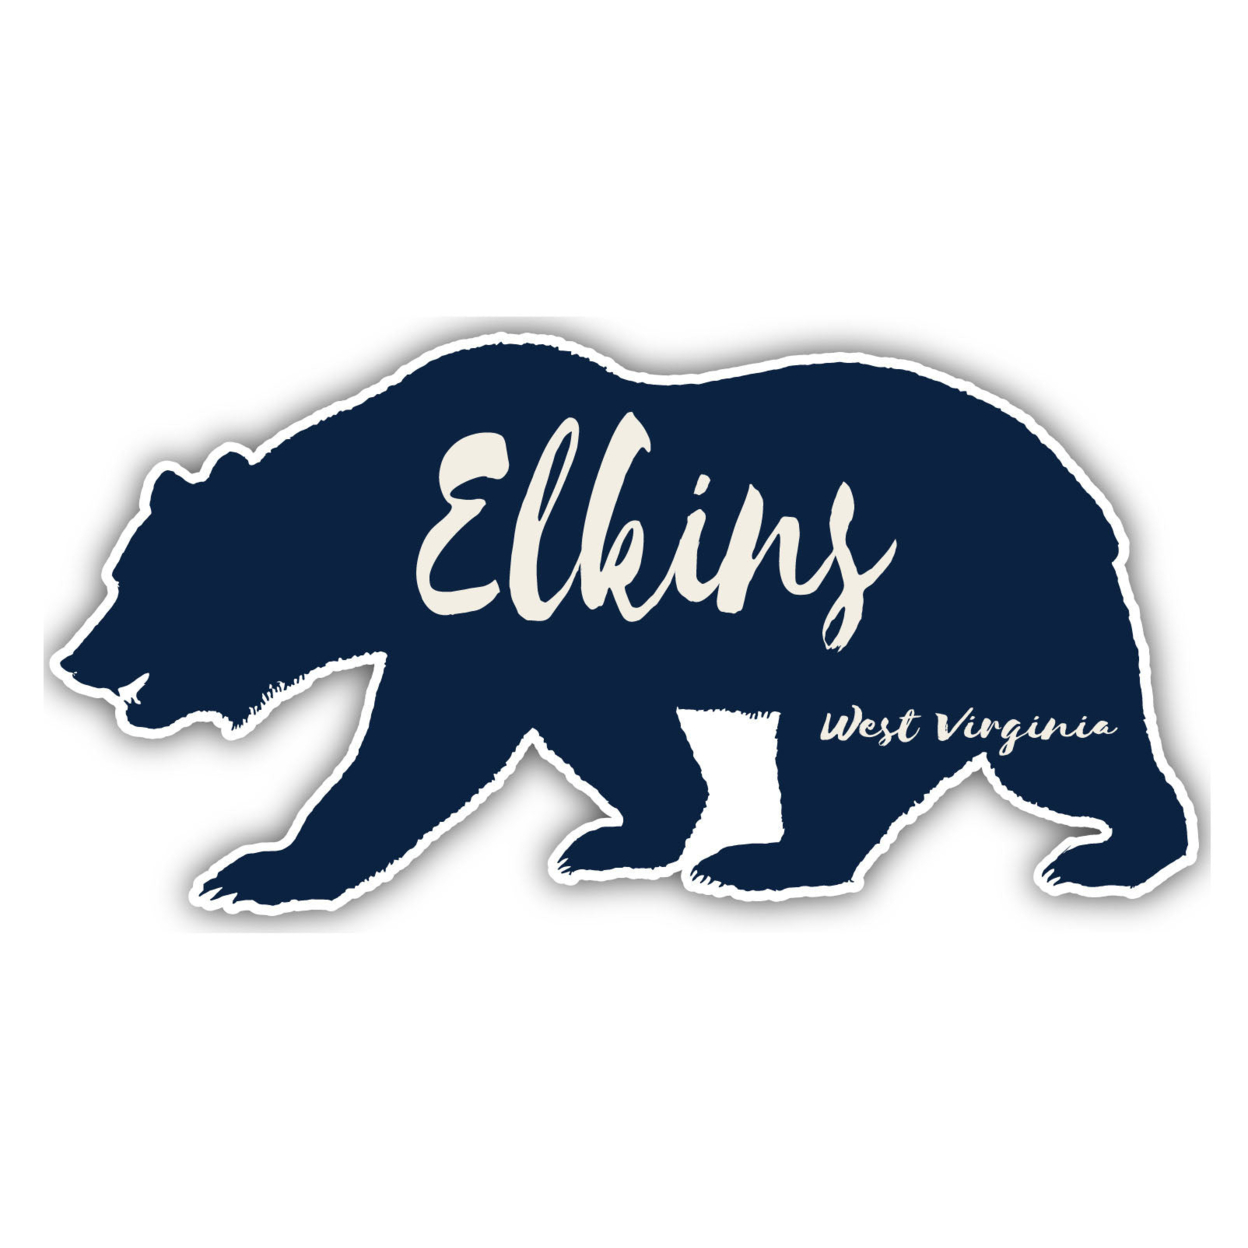 Elkins West Virginia Souvenir Decorative Stickers (Choose Theme And Size) - Single Unit, 2-Inch, Camp Life